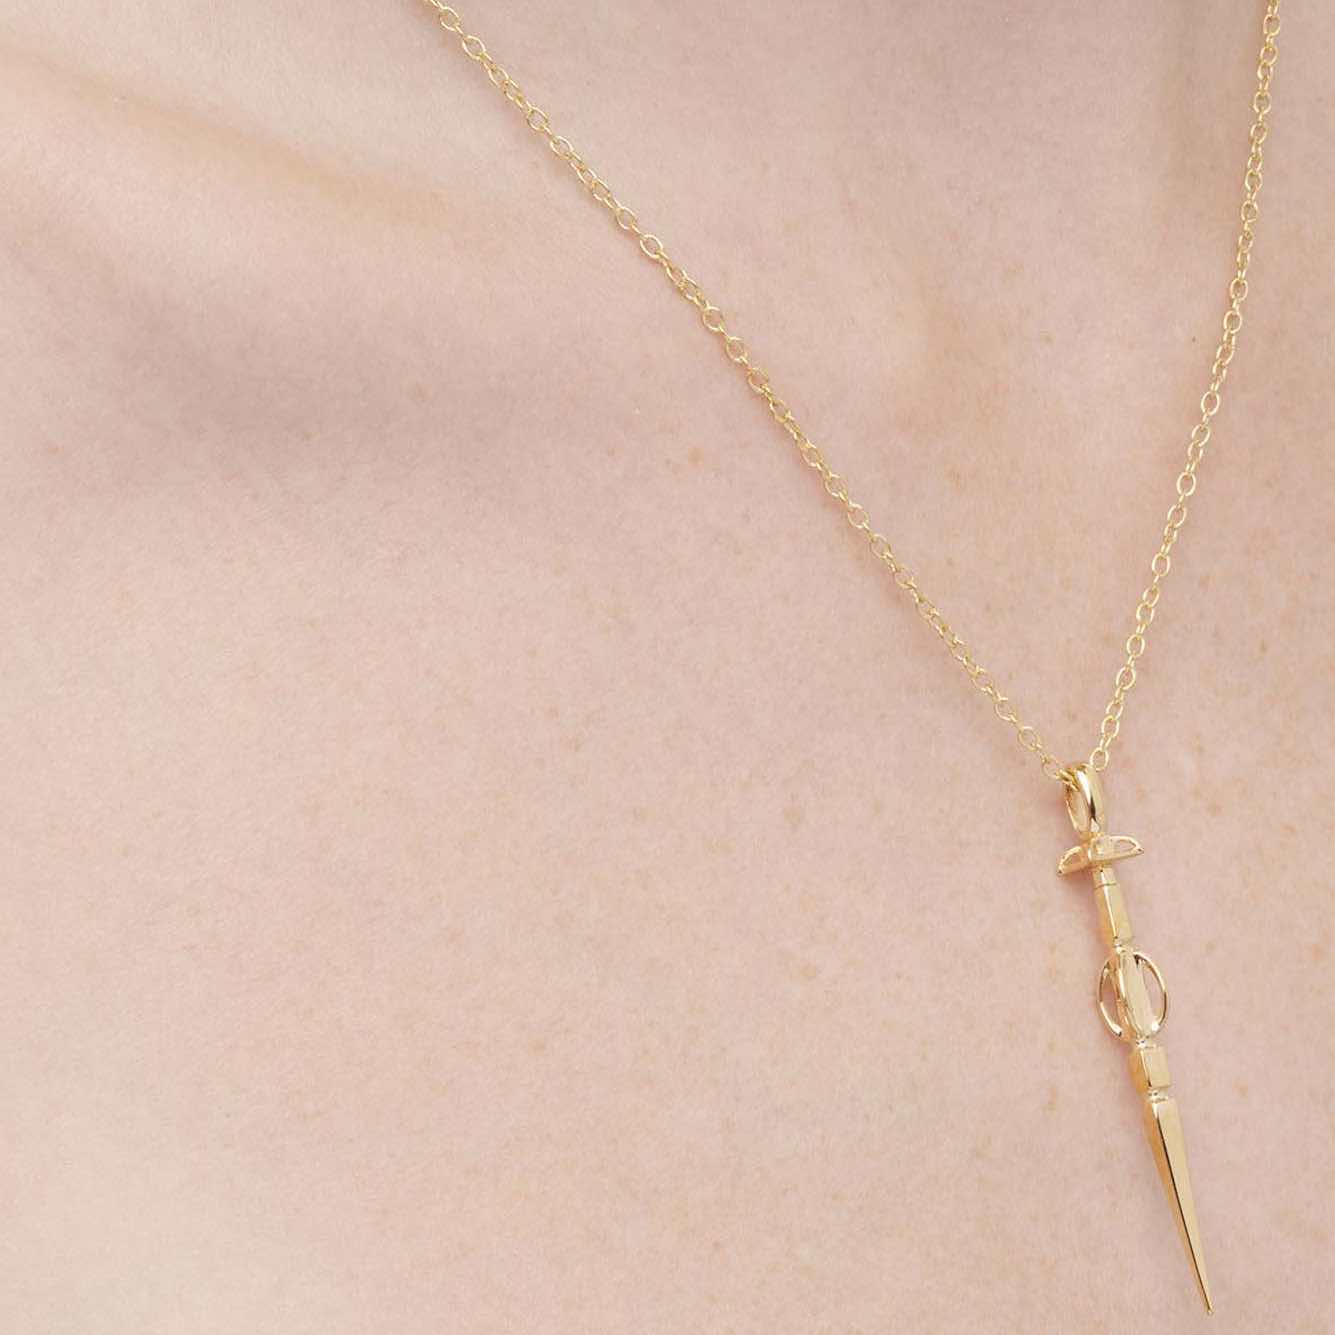 Soldiser Freya Medium Gold Necklace on model zoomed in